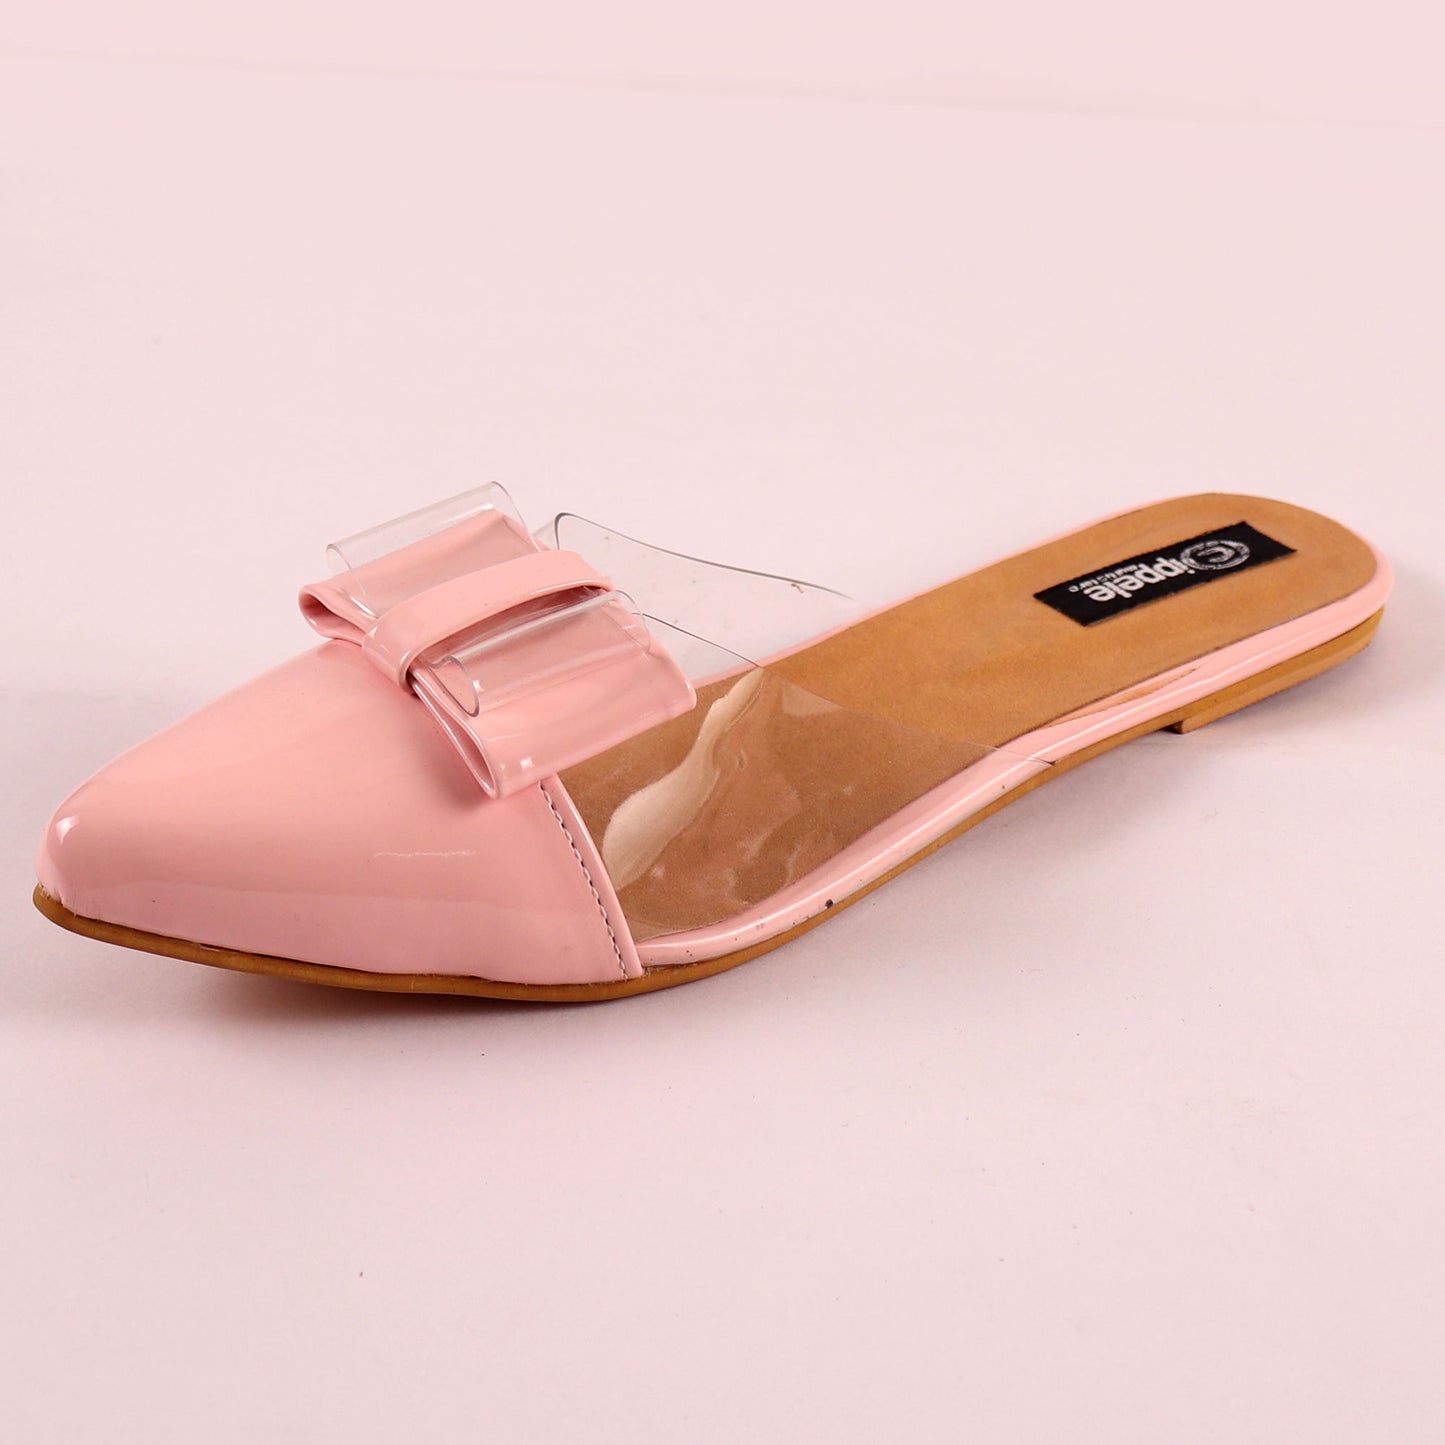 Foot Wear,The Finska Cookie Ribbon Mules in Baby Pink - Cippele Multi Store